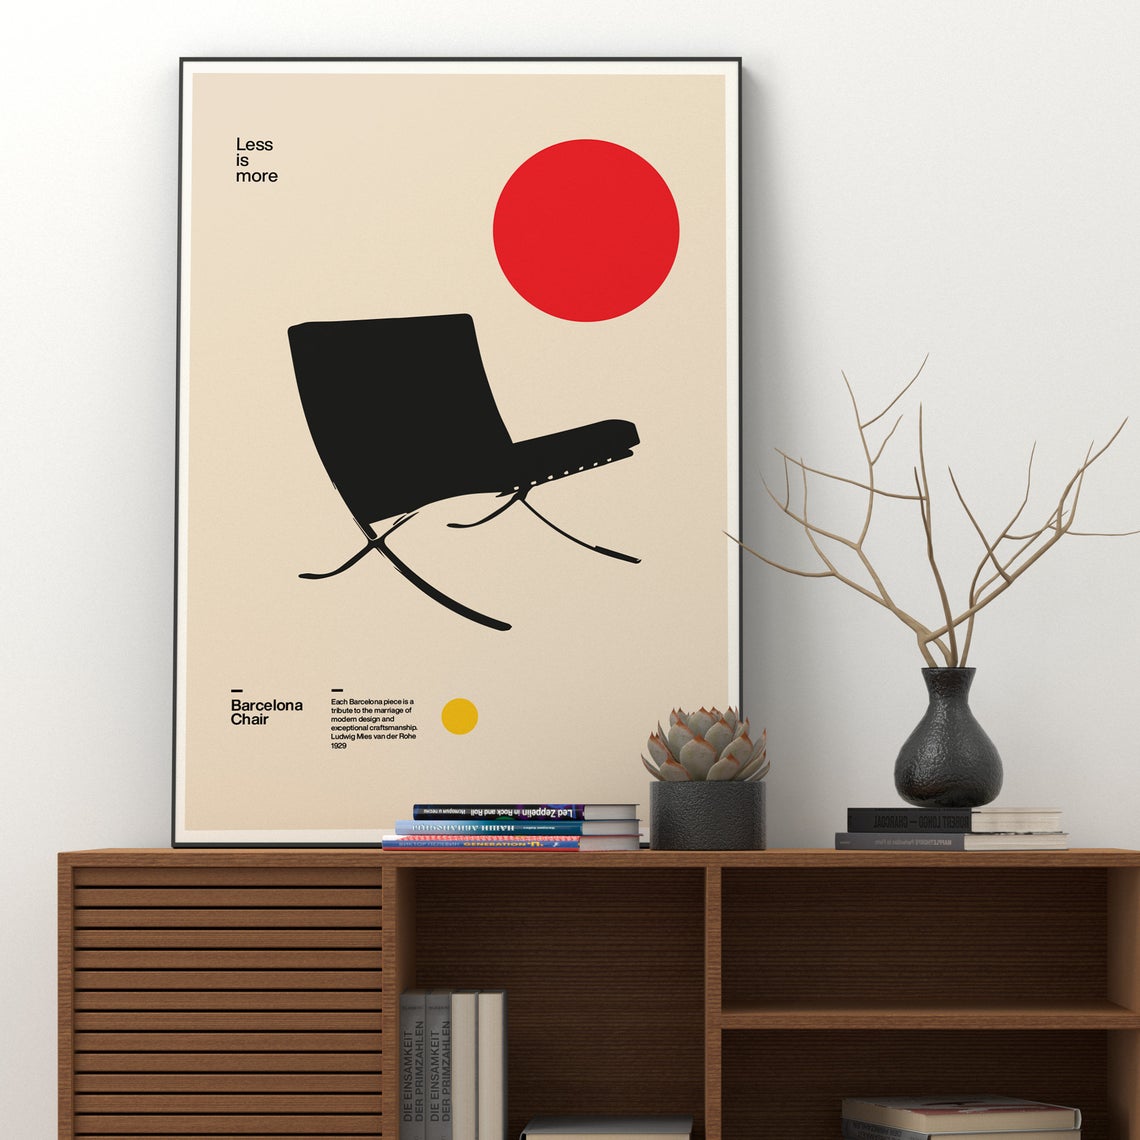 Barcelona Chair - Ludwig Mies Van der Rohe